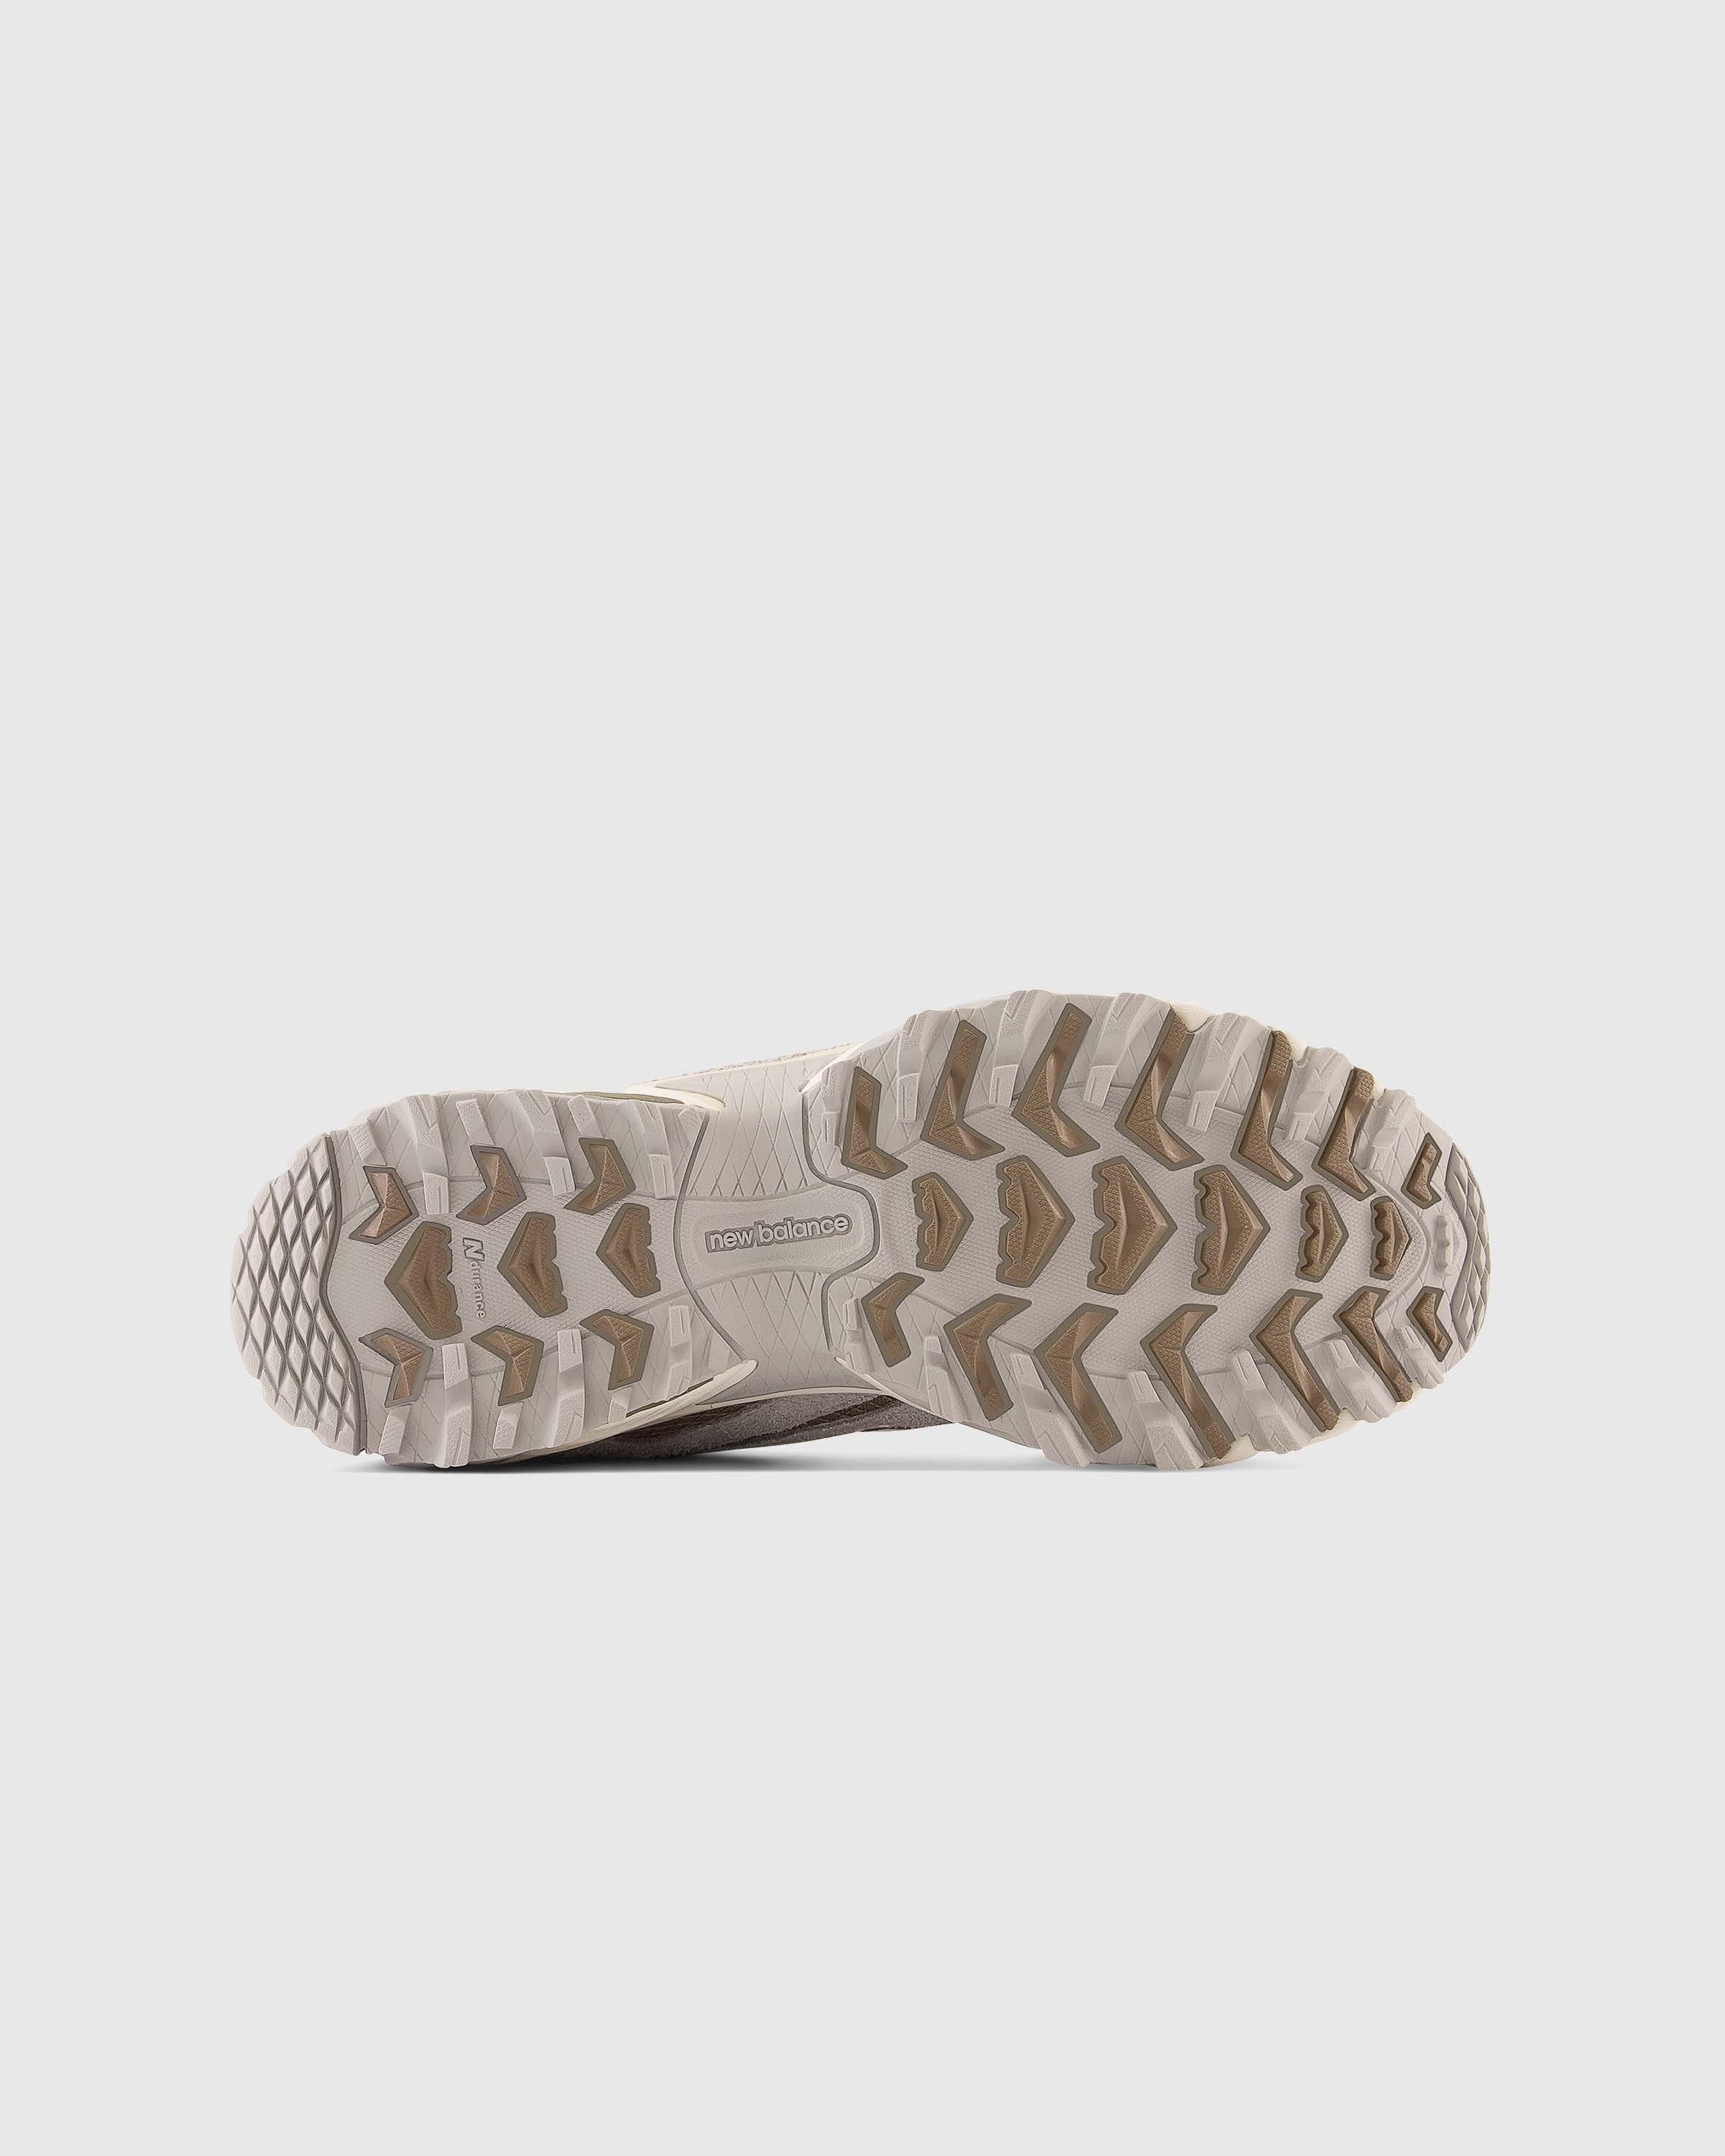 New Balance - 610v1 Grey - Footwear - Grey - Image 5